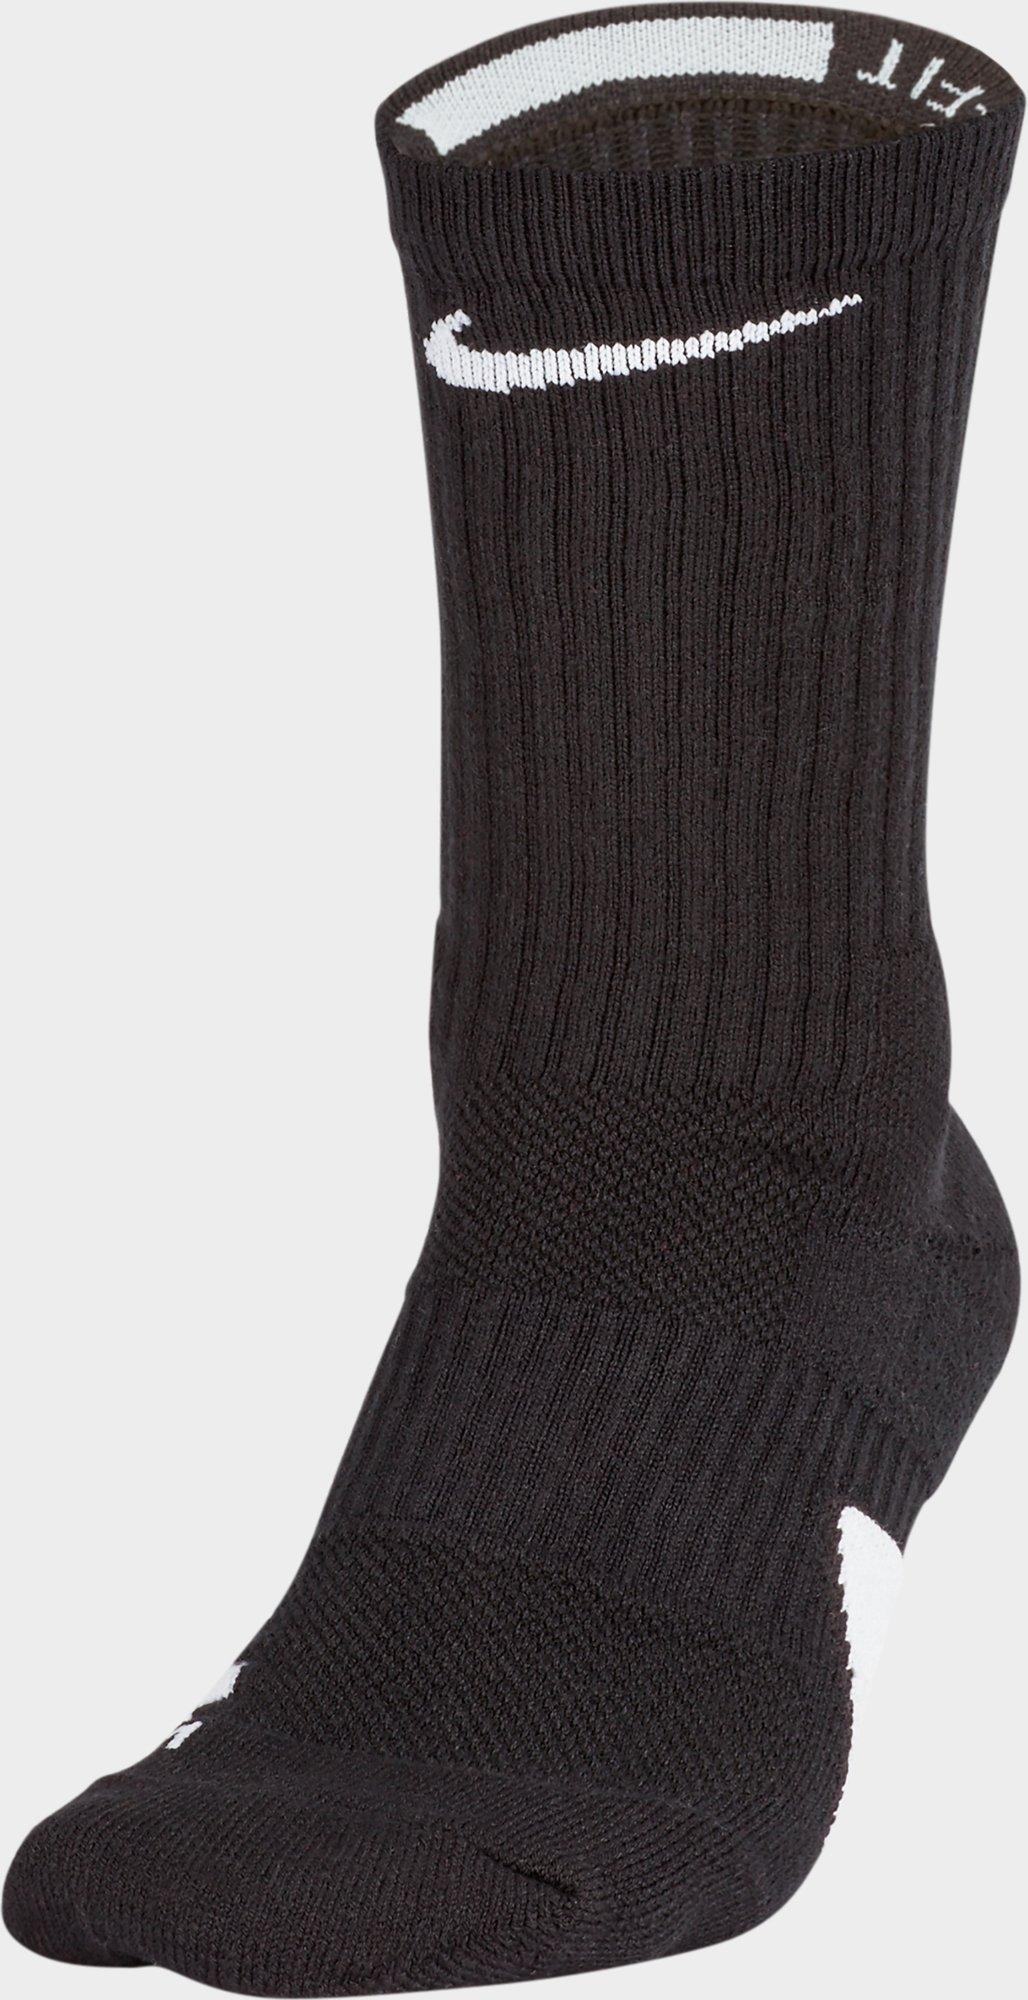 elite socks black